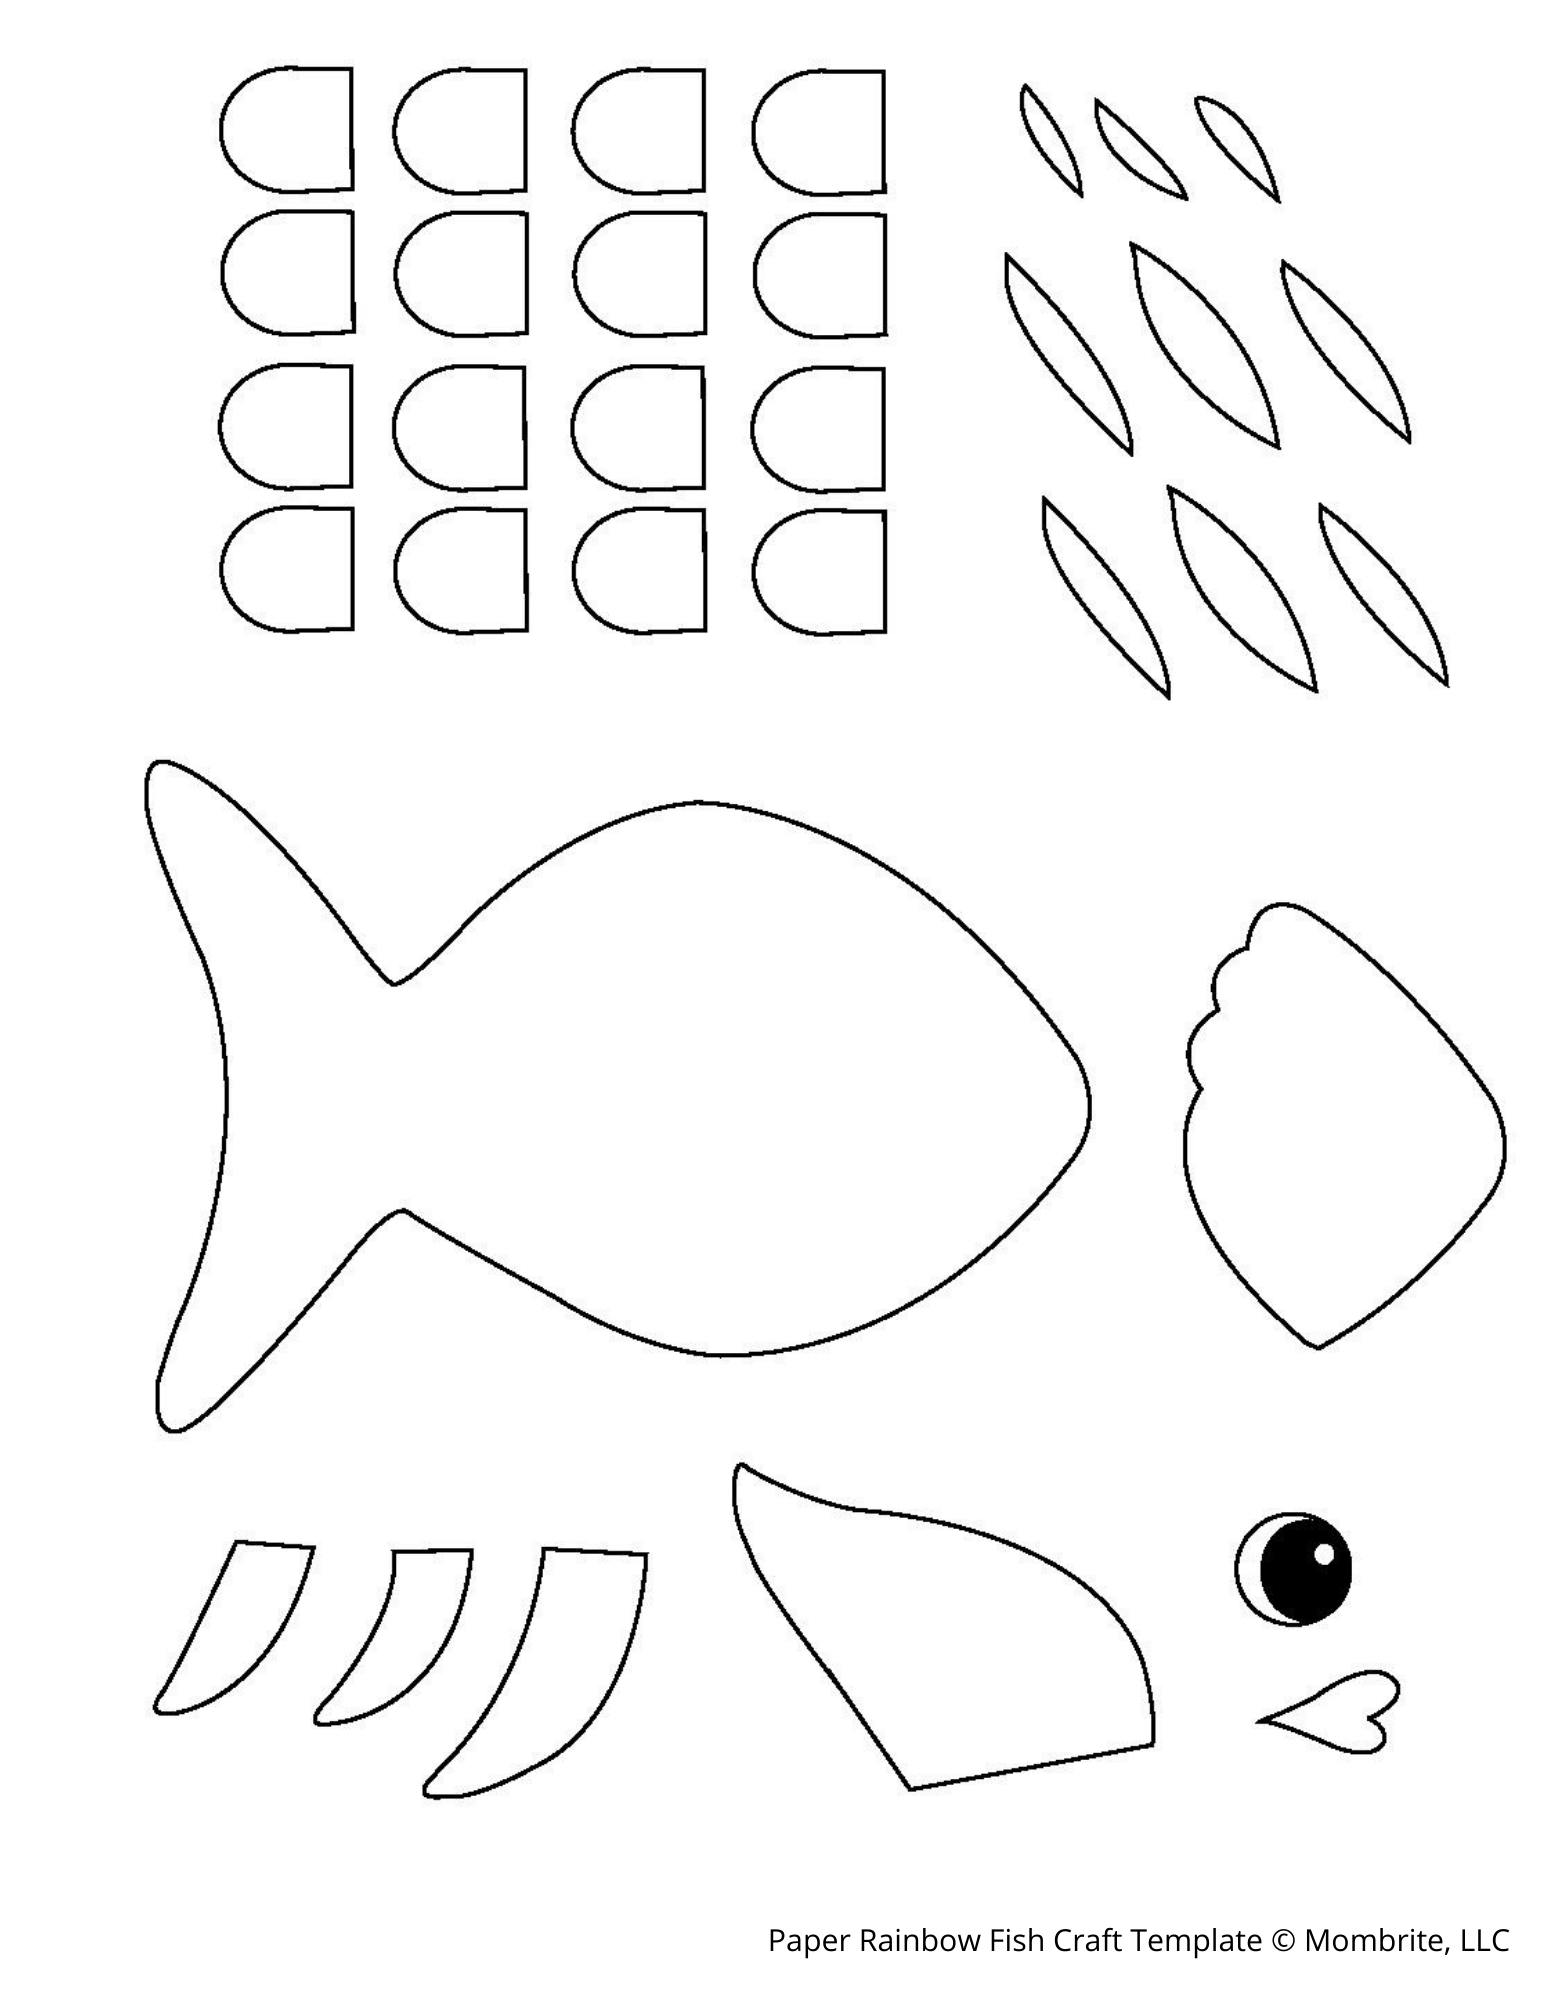 Free Paper Rainbow Fish Craft Template